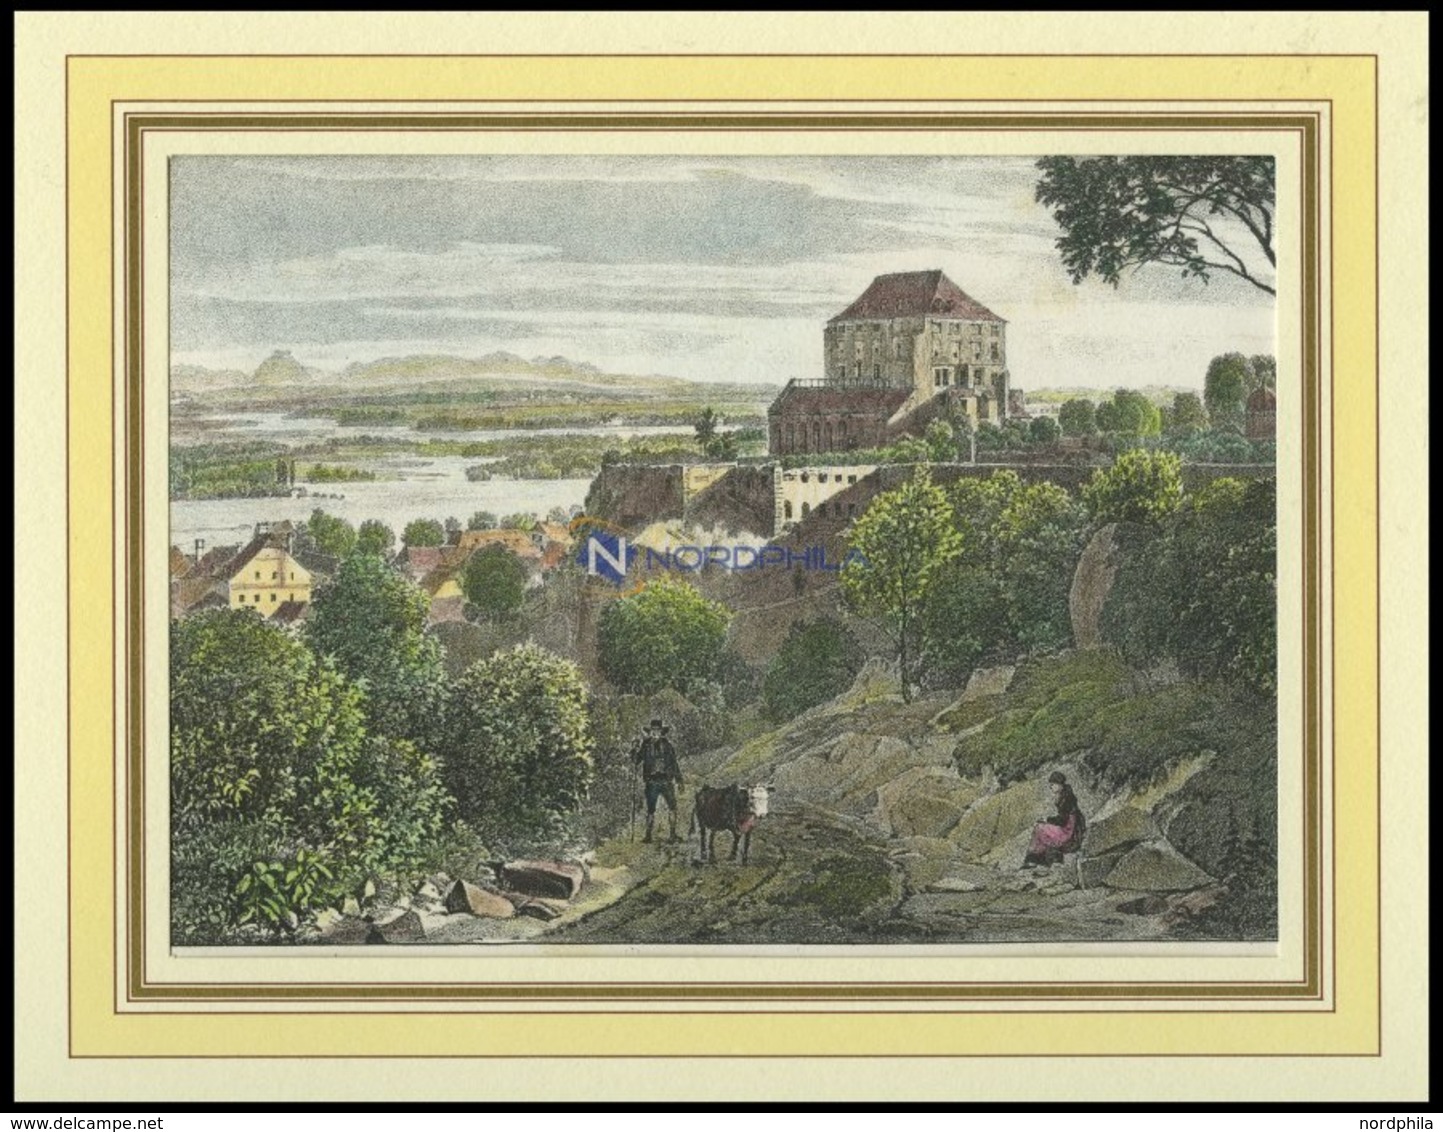 STEYEREGG, Gesamtansicht, Kolorierter Holzstich Um 1880 - Litografía